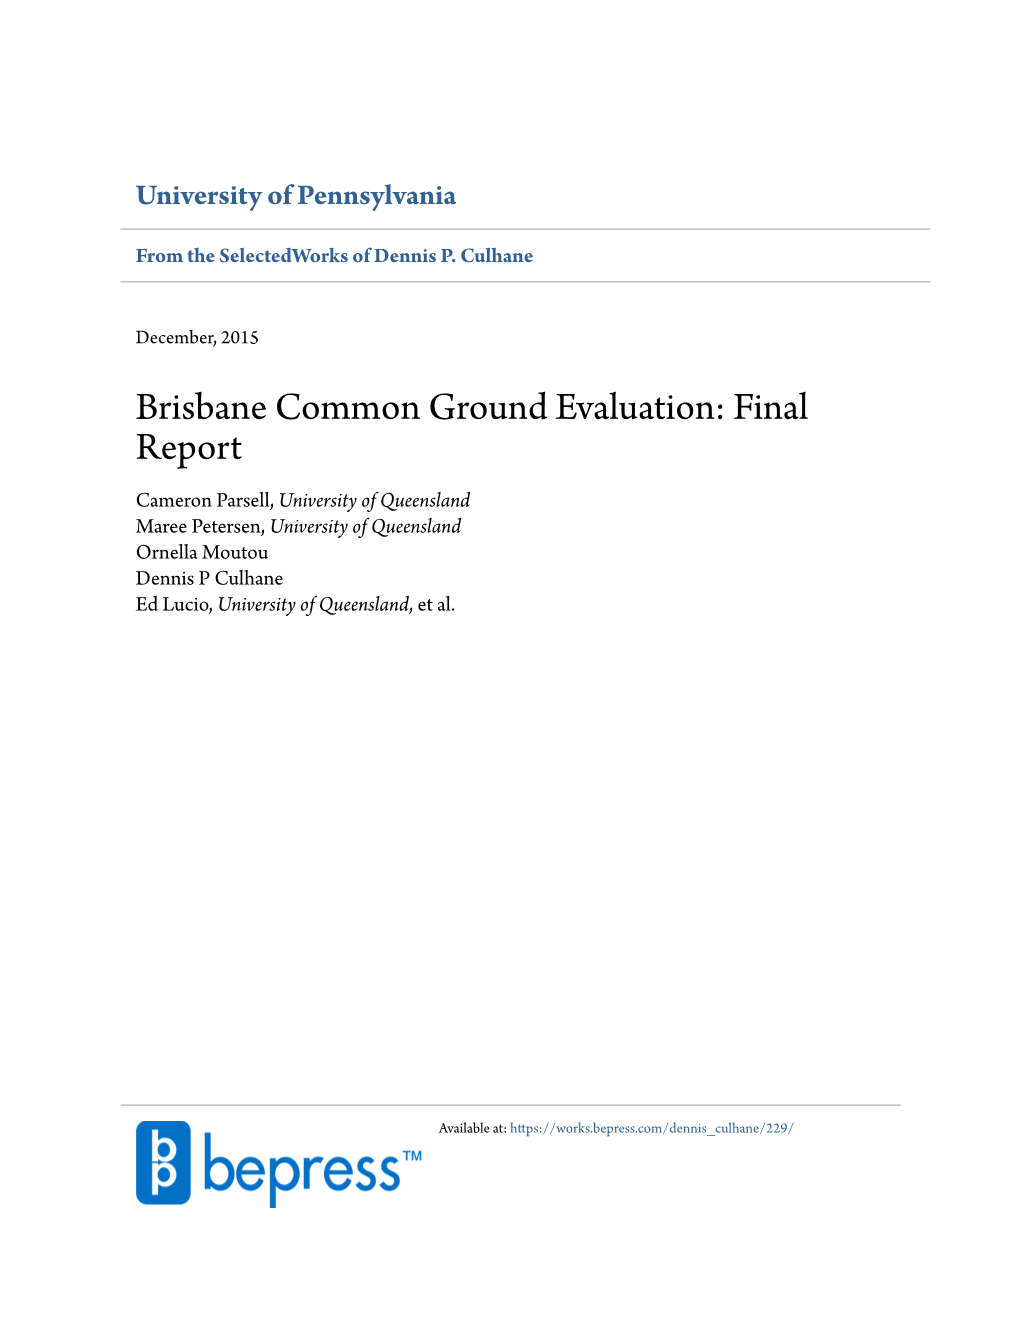 Brisbane Common Ground Evaluation: Final Report